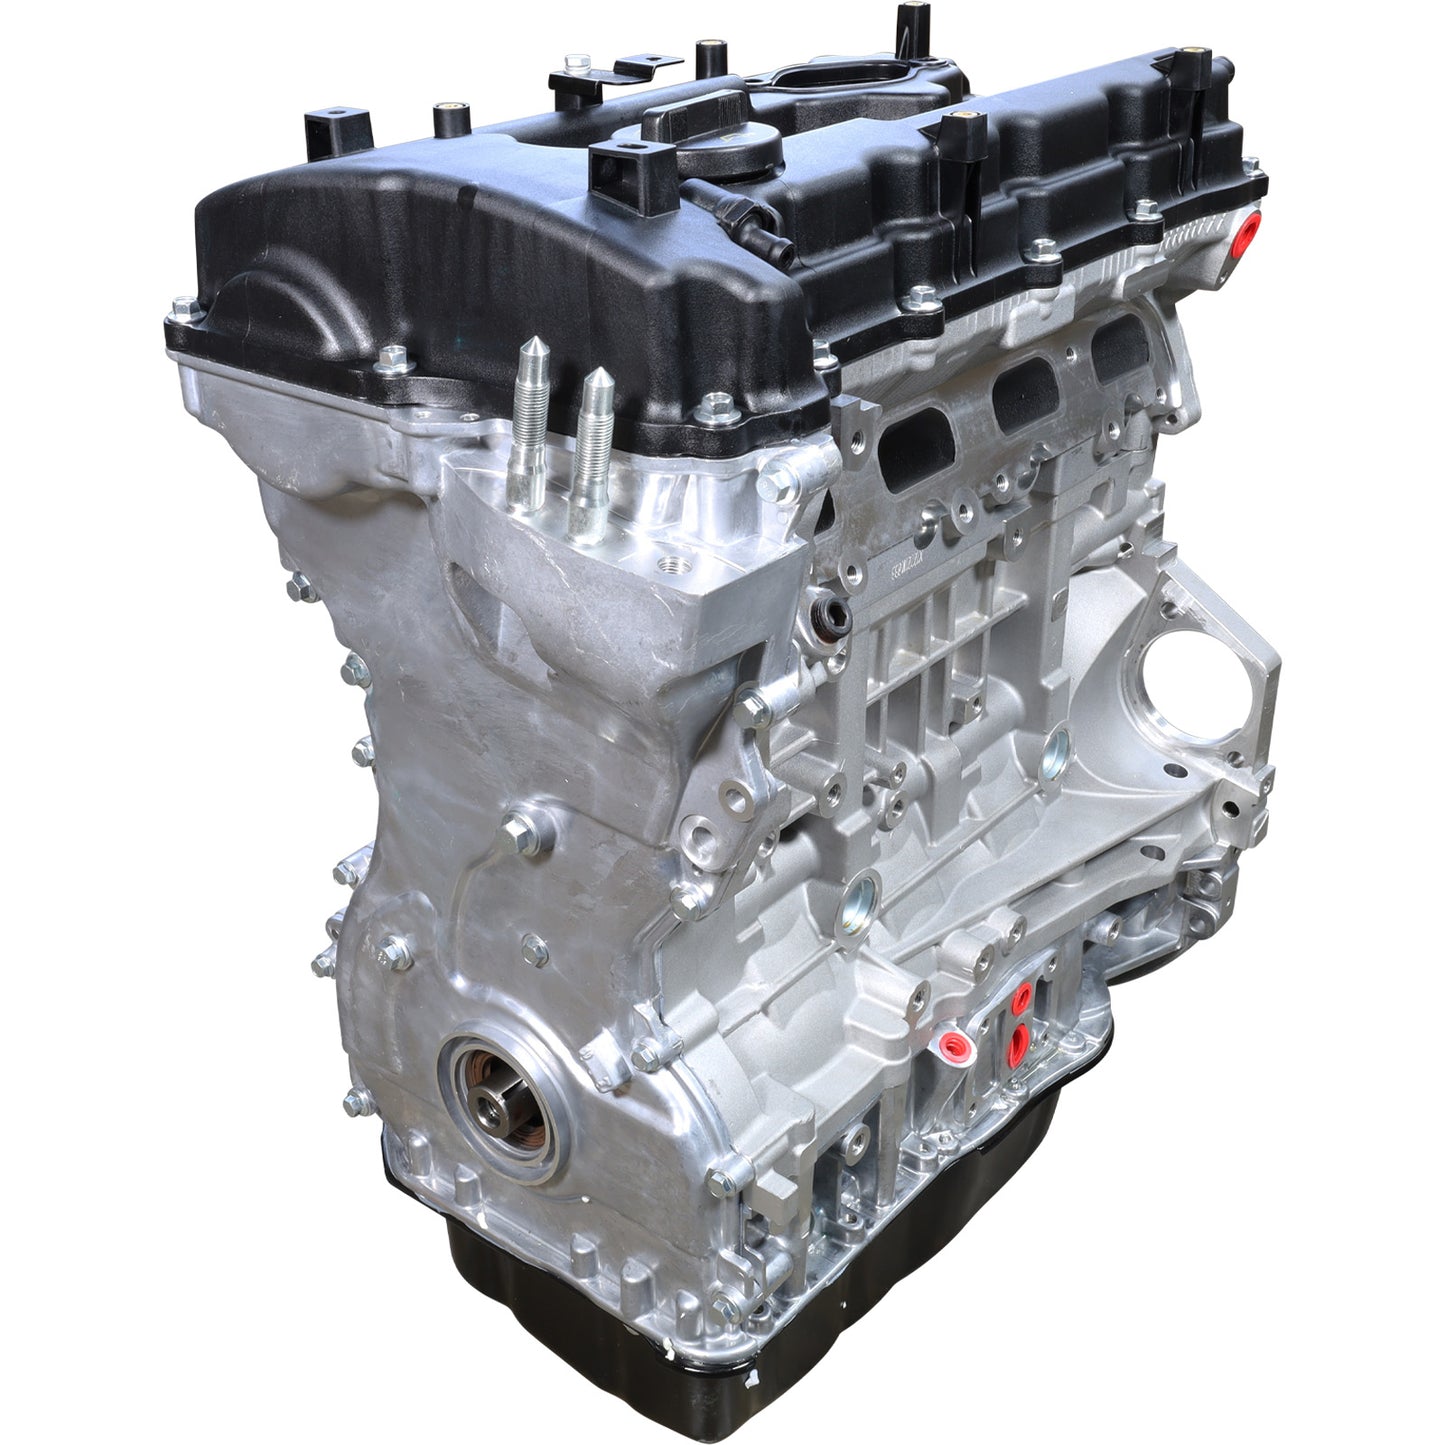 Brand New 2.4 Petrol Long Engine G4KJ suit Hyundai IX35 & Santa Fe